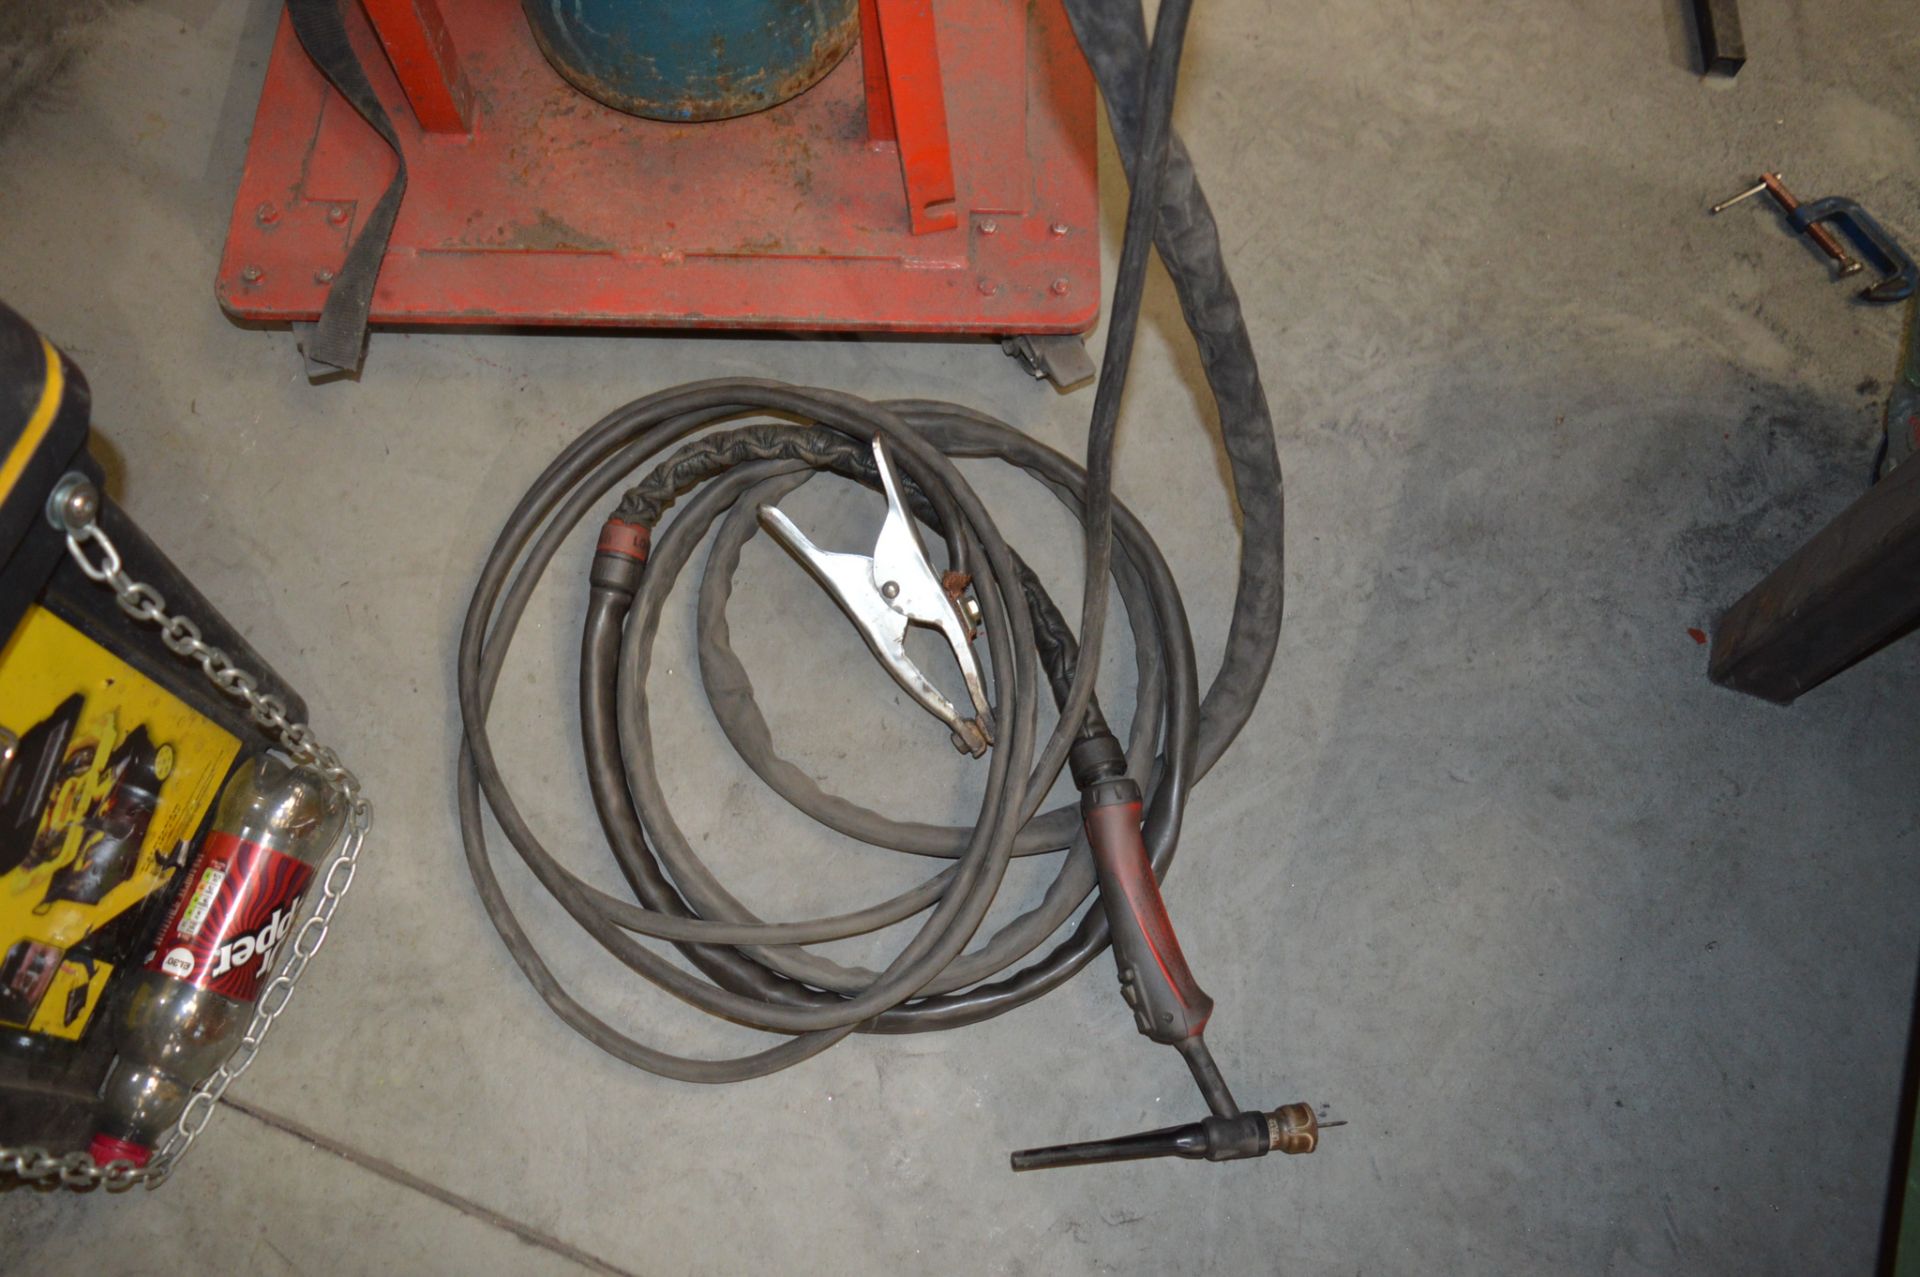 Lorch Handytig 180DC Control Pro TIG welder S/N: 0305-2629-0019-9 c/w torch, regulator and earth - Image 2 of 3